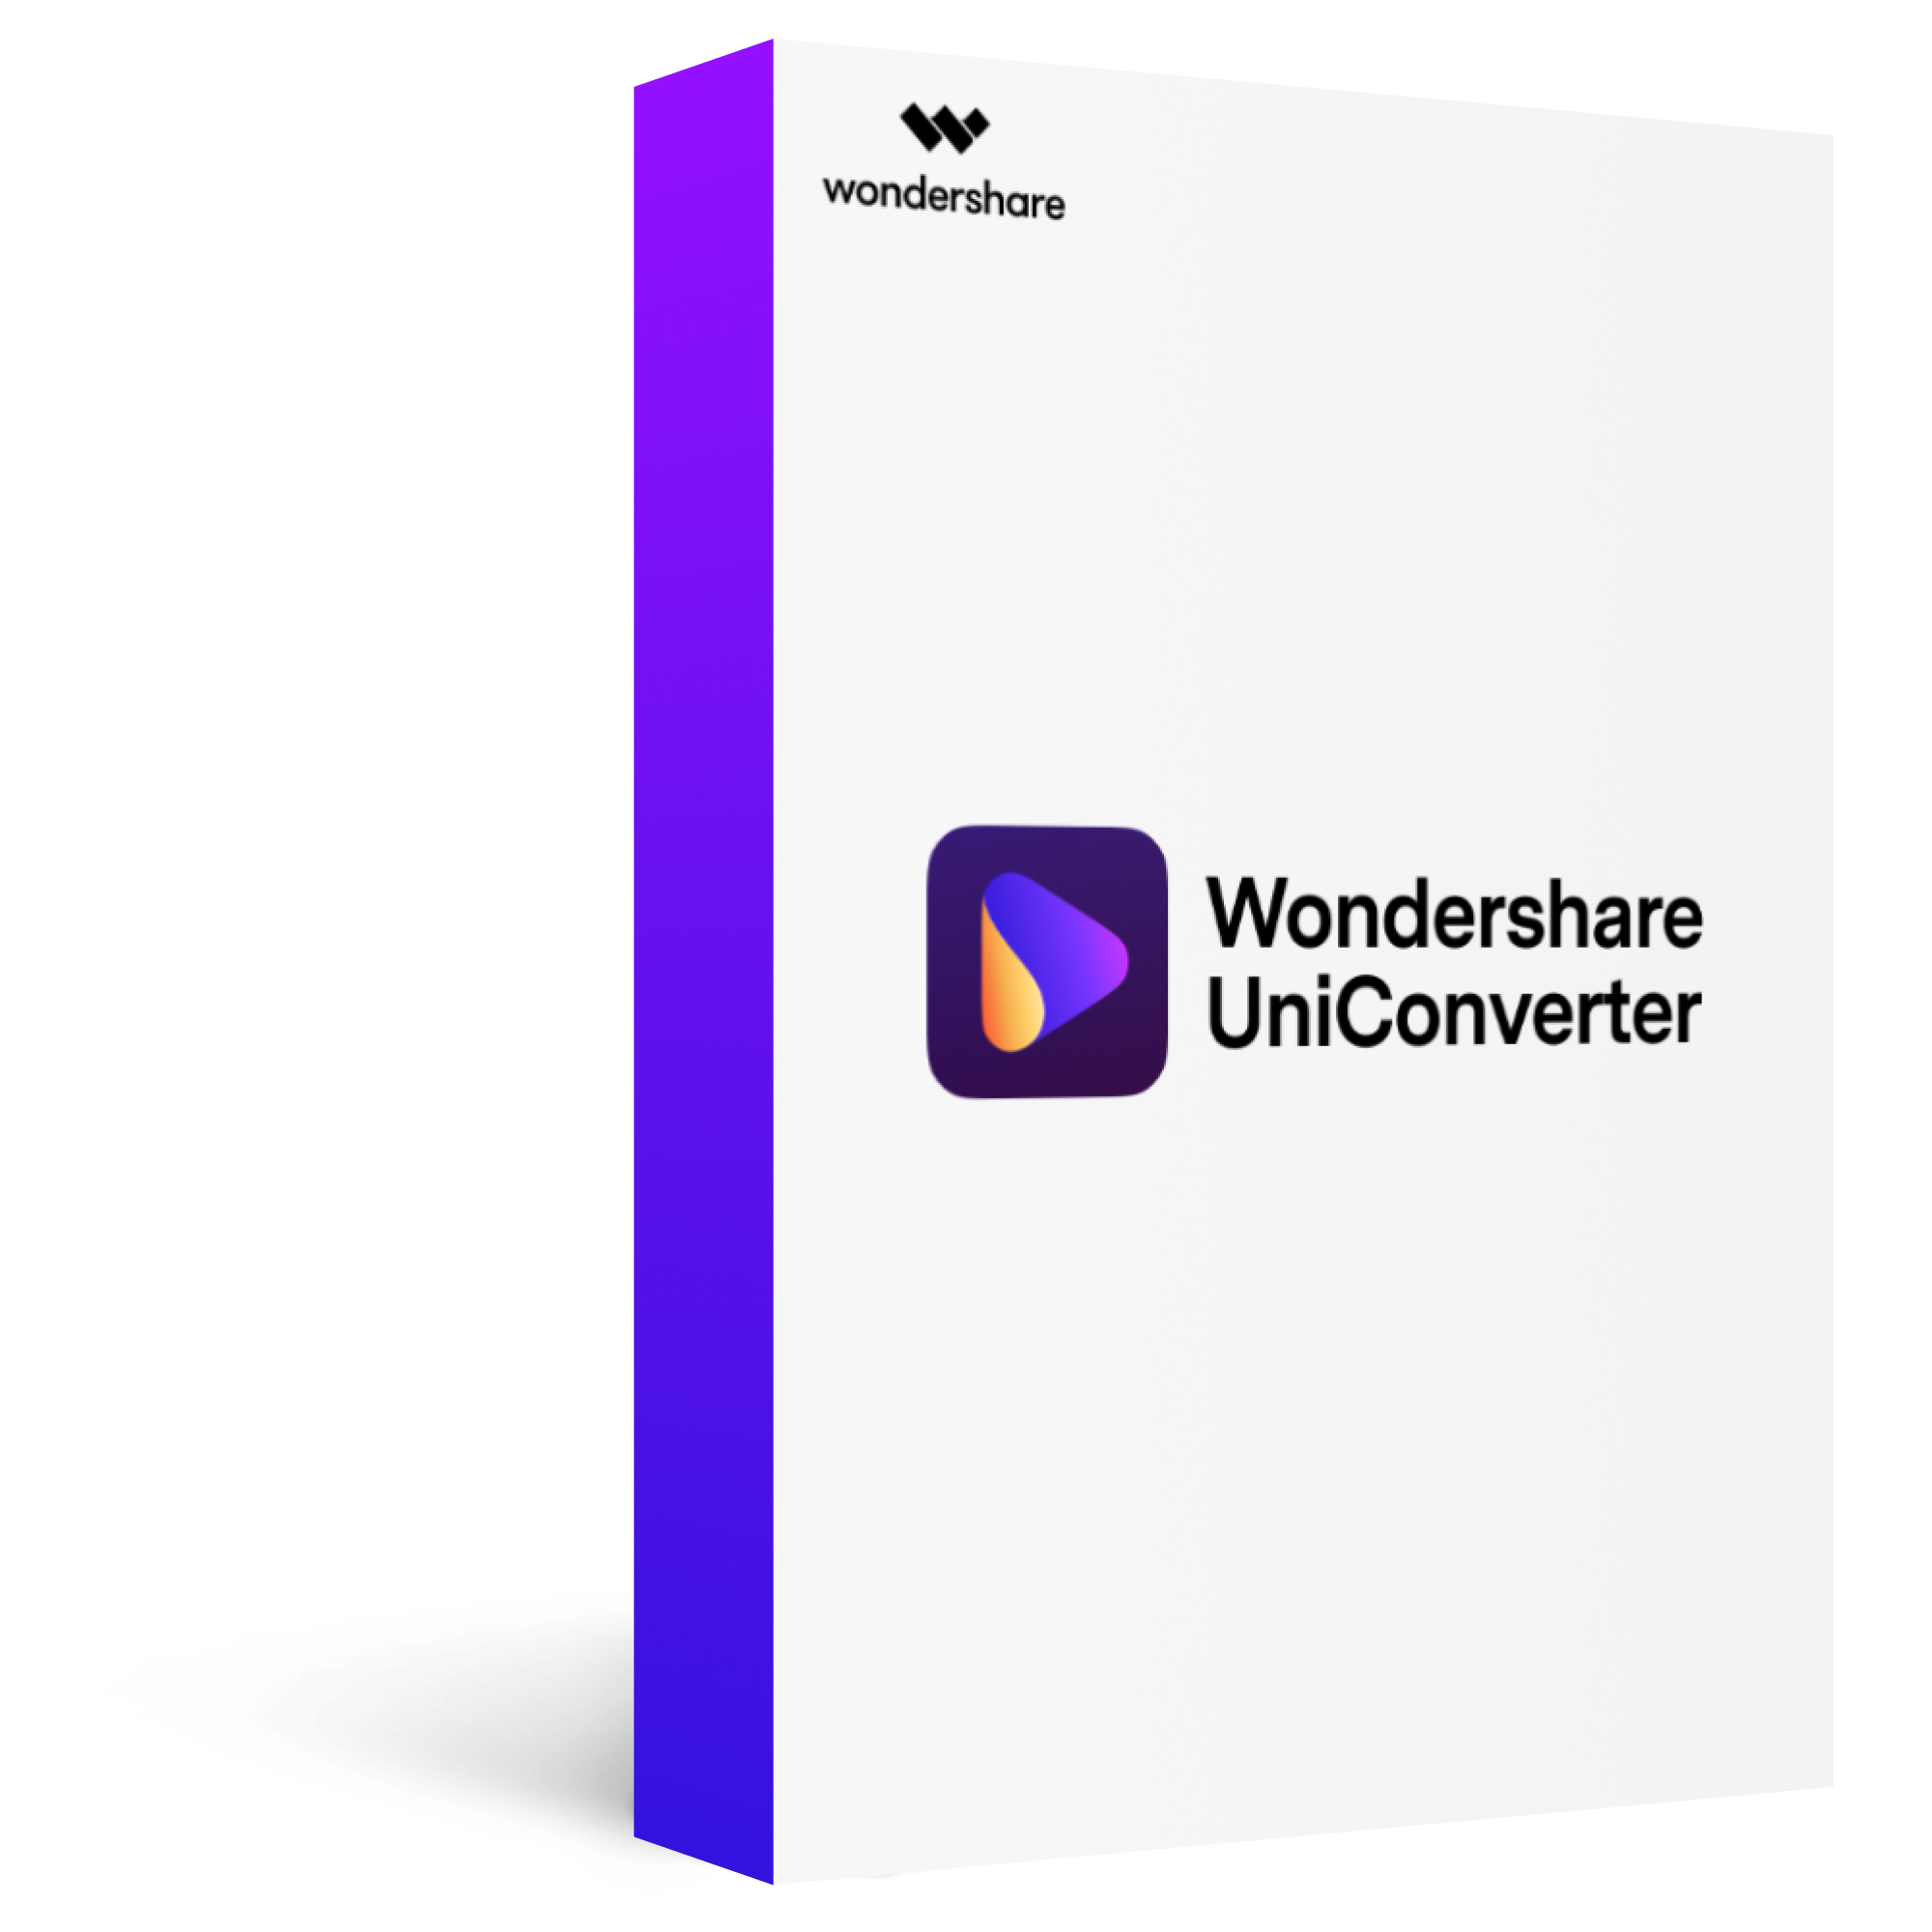 Wondershare uniconverter 13